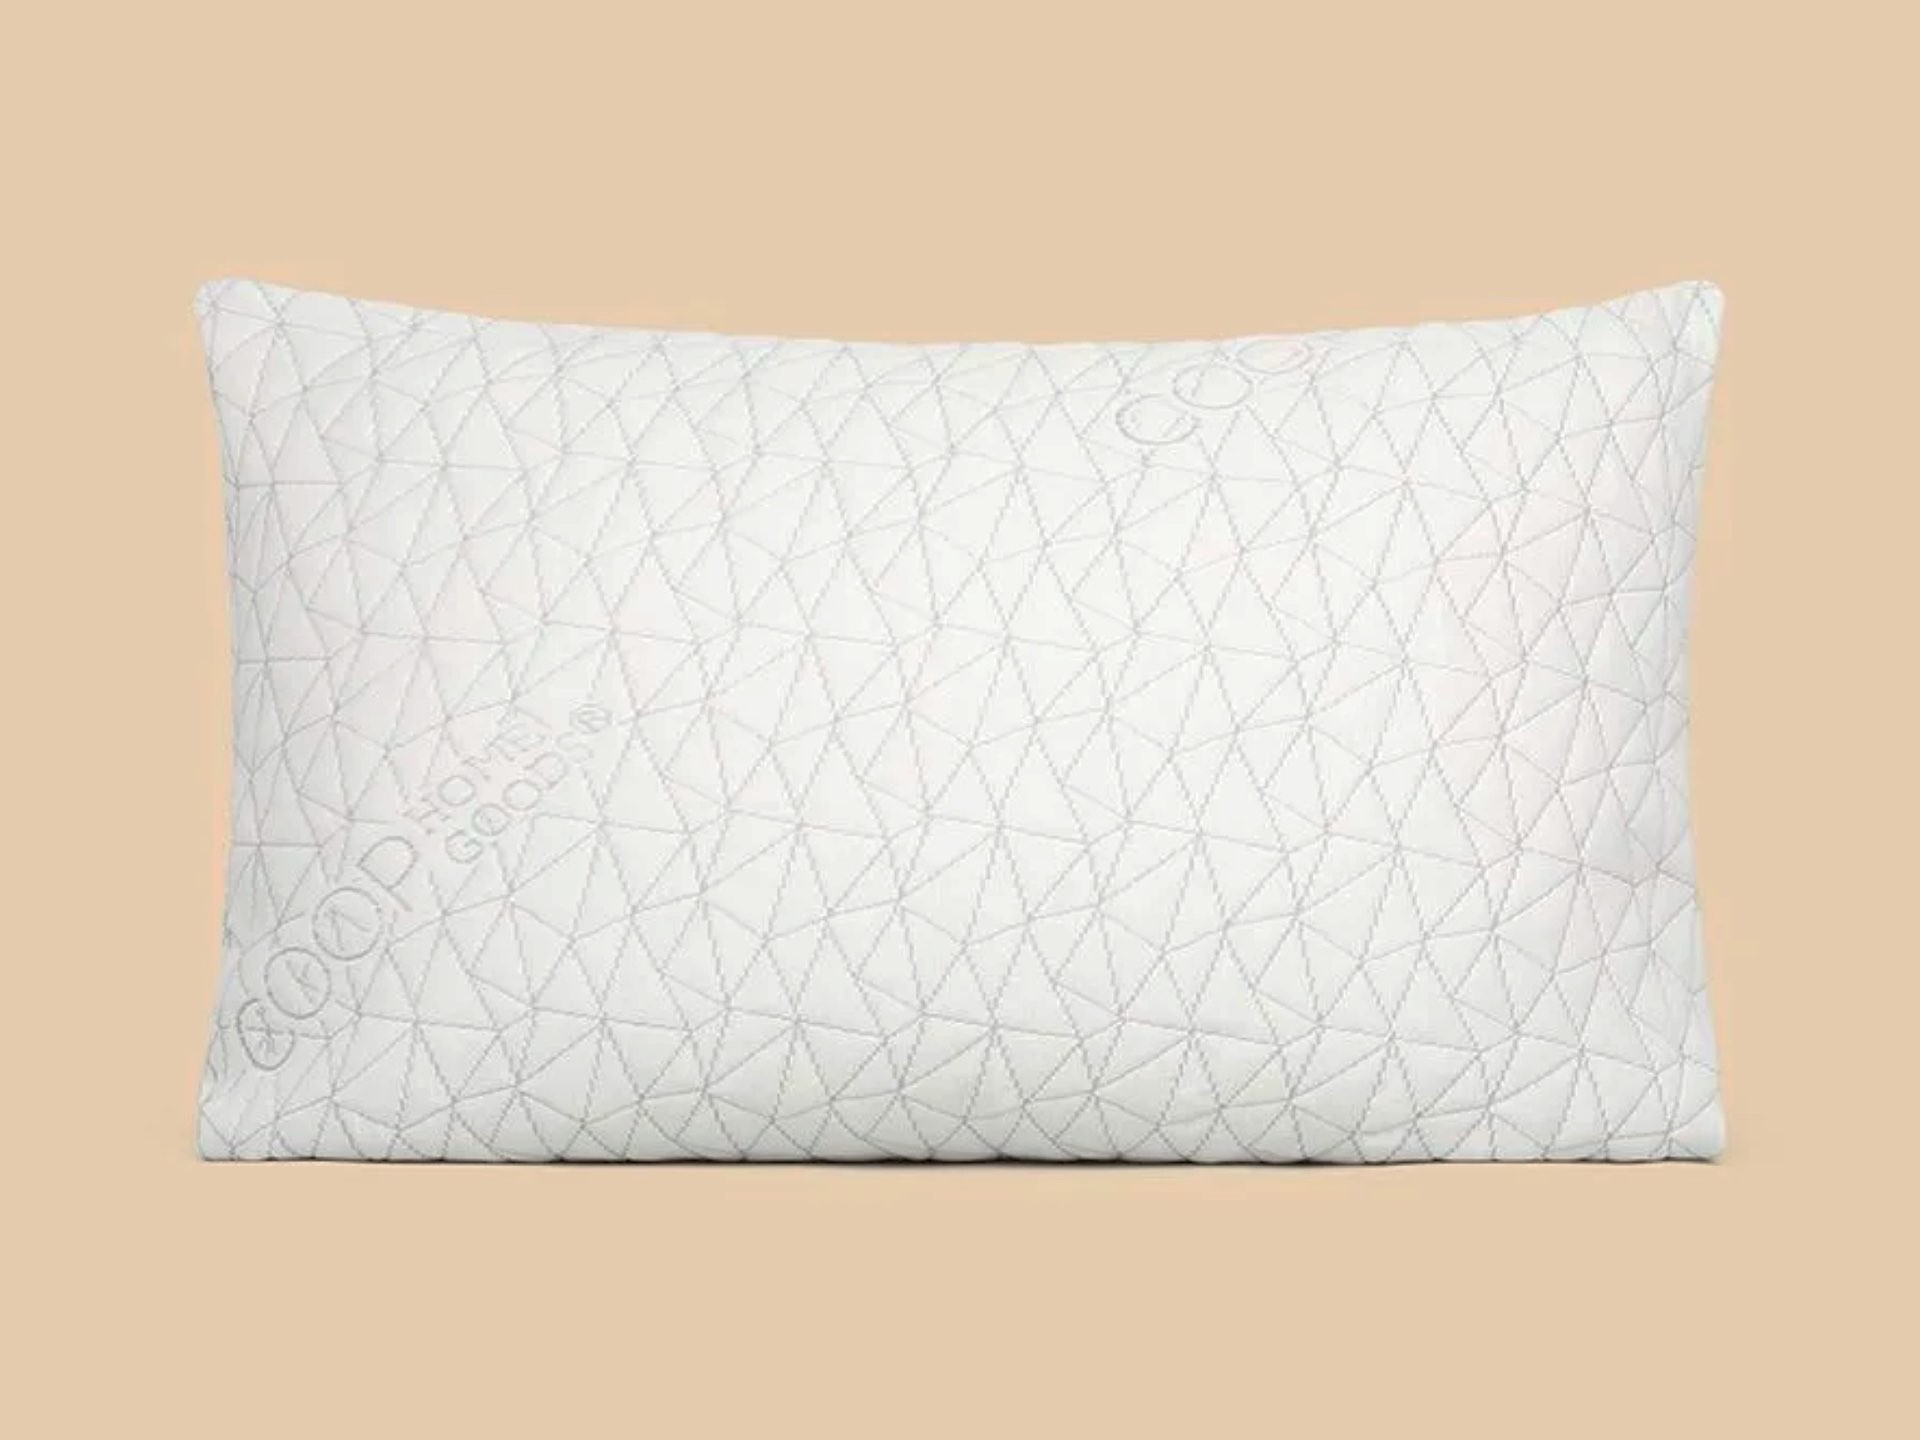 Coop Home Goods “The Original” Adjustable Loft Pillow